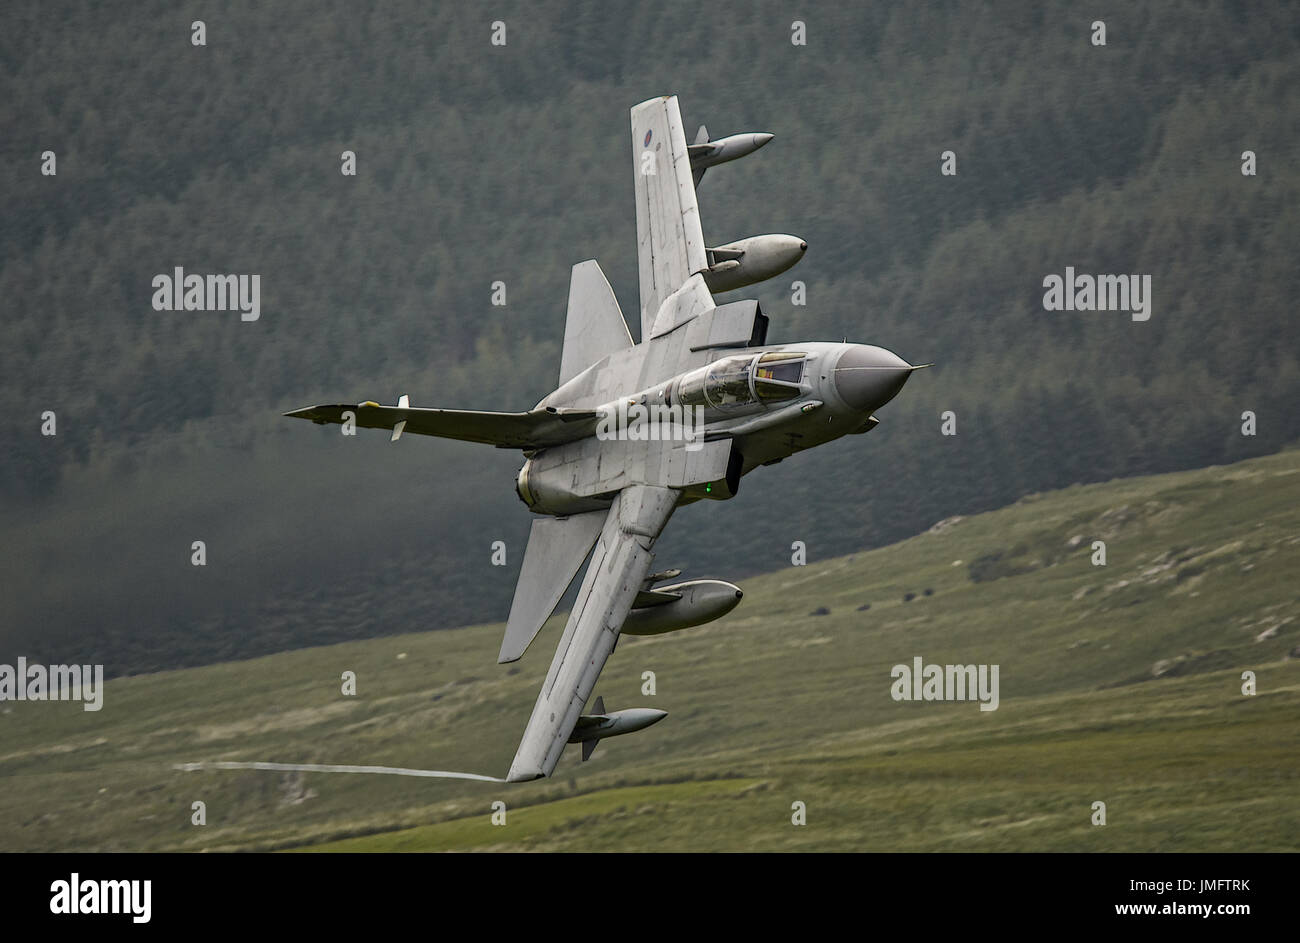 RAF Tornado GR4 operating Low level Stock Photo